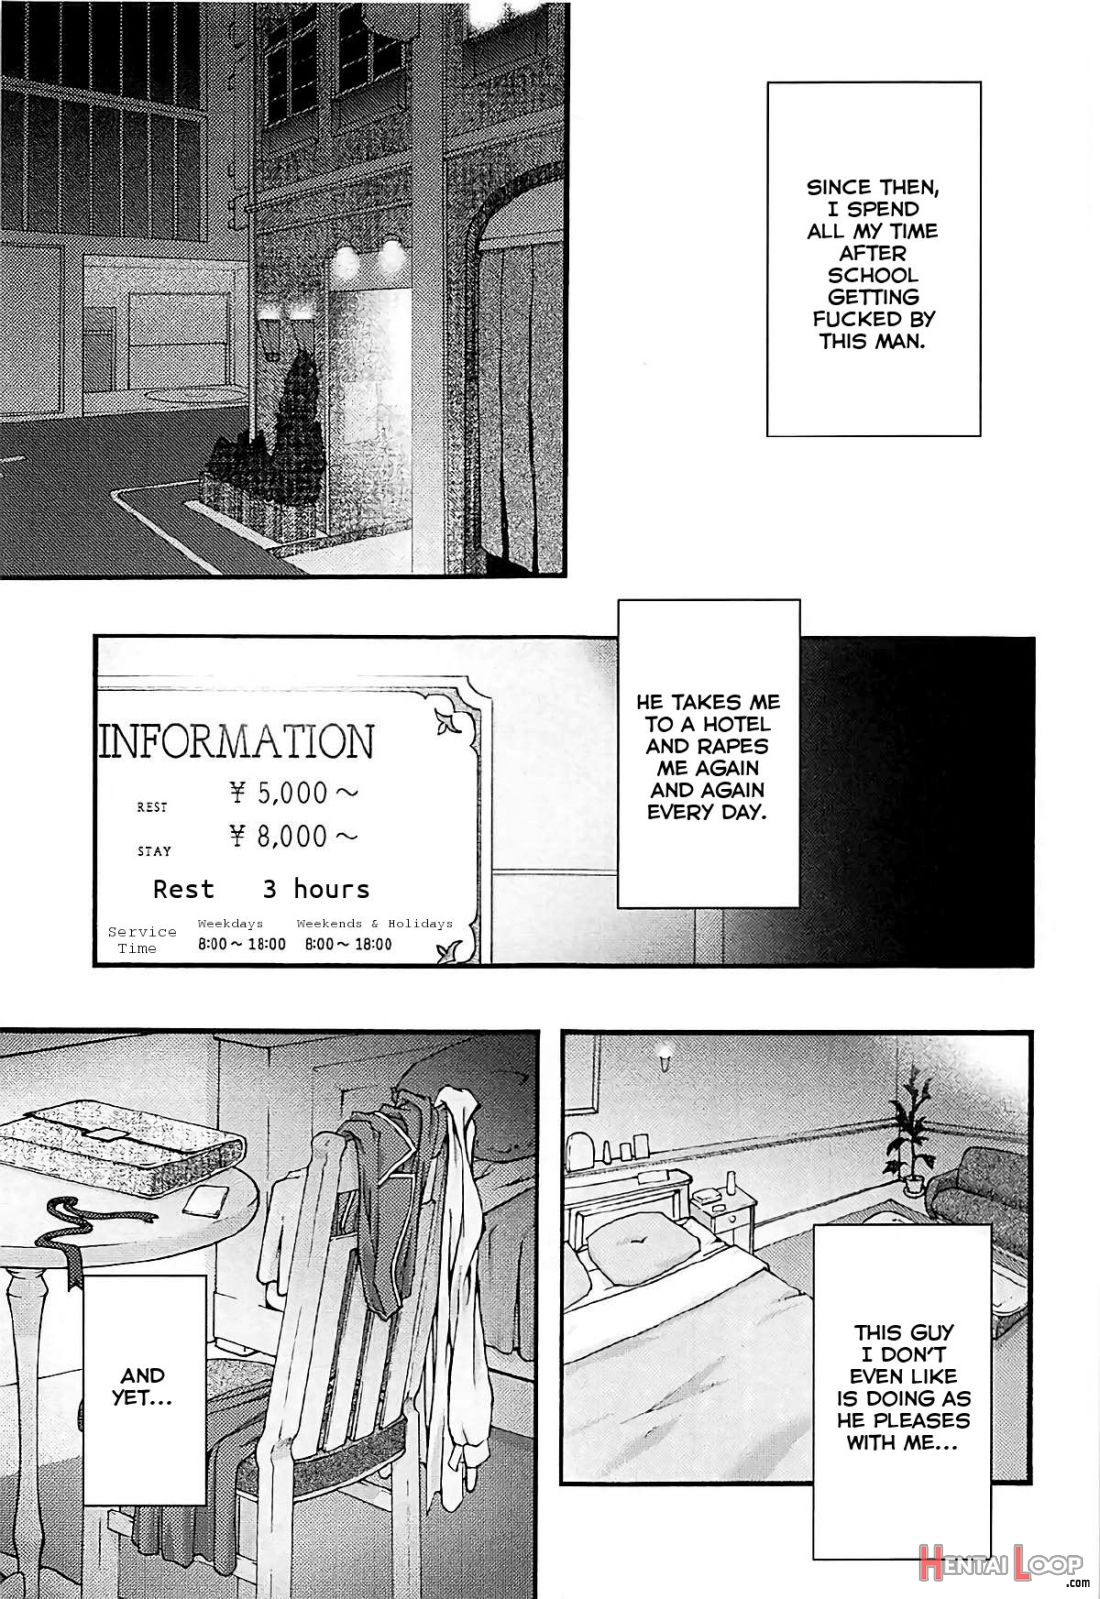 Ochiru -asuna3- page 5